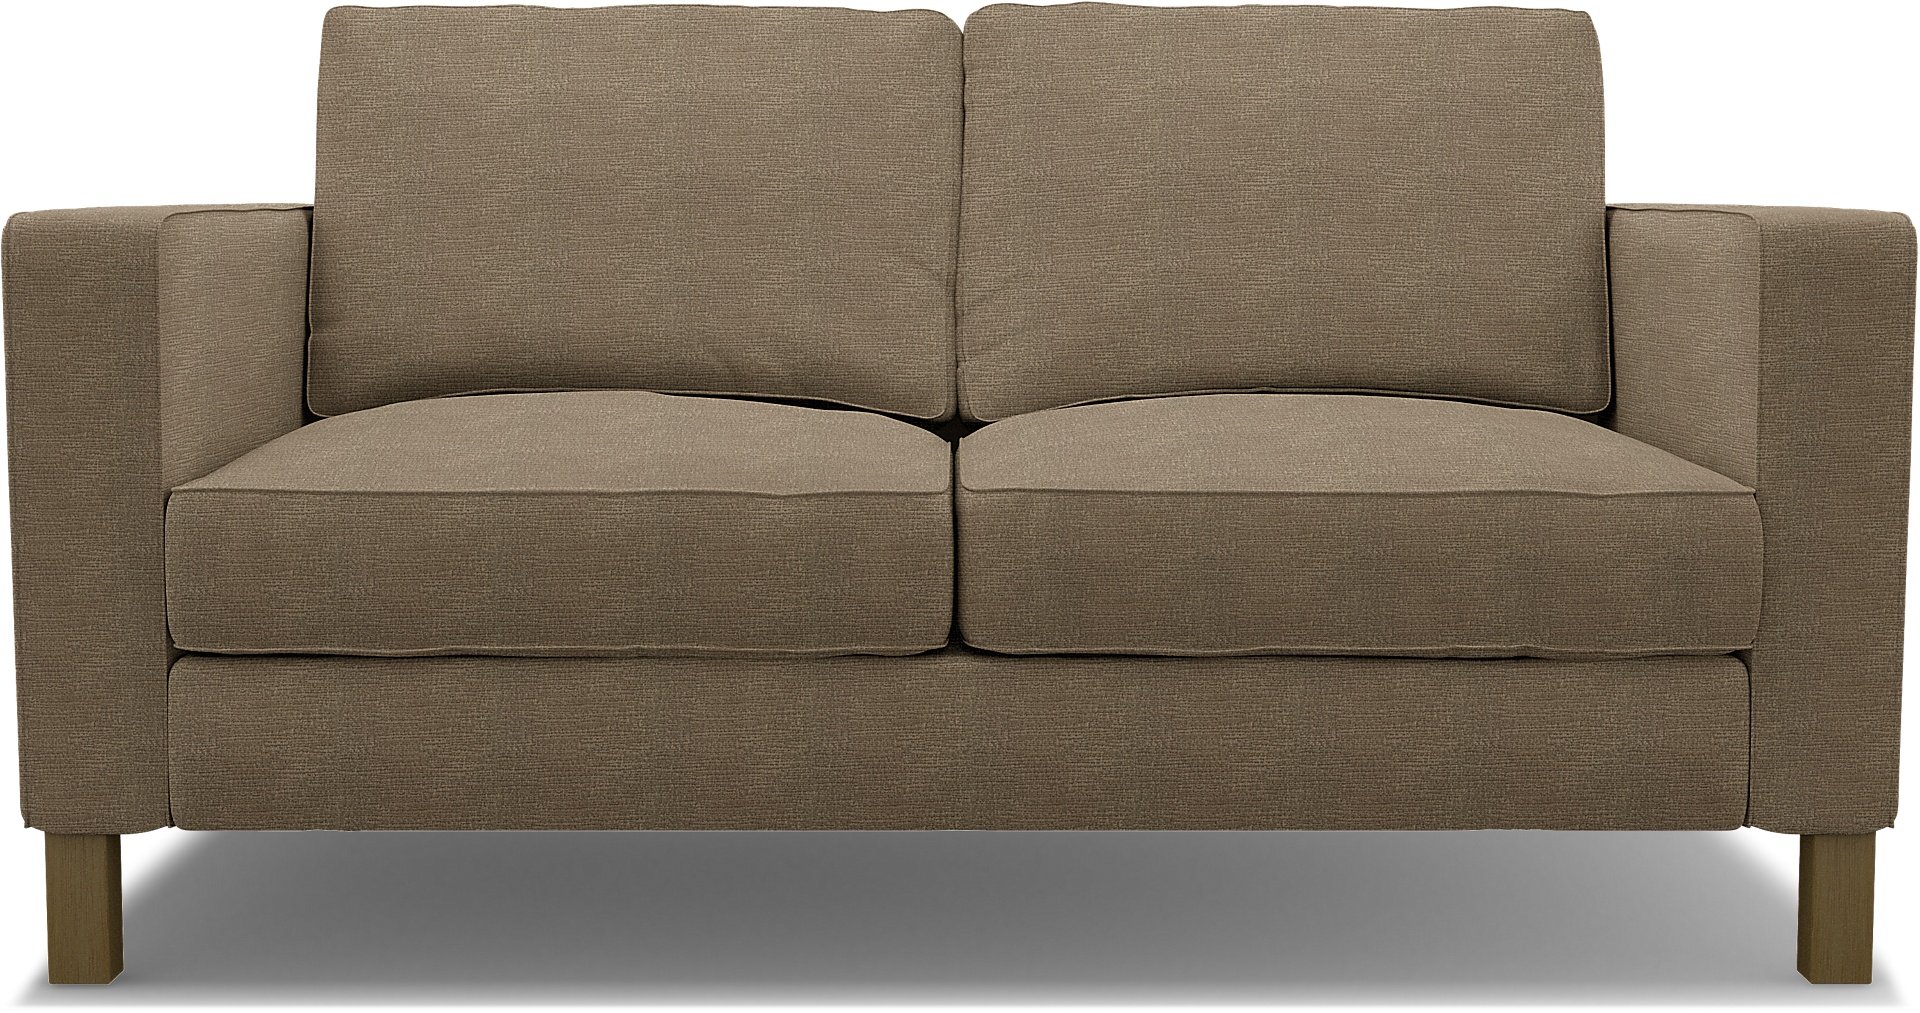 IKEA - Karlstad 2 Seater Sofa Cover, Camel, Boucle & Texture - Bemz